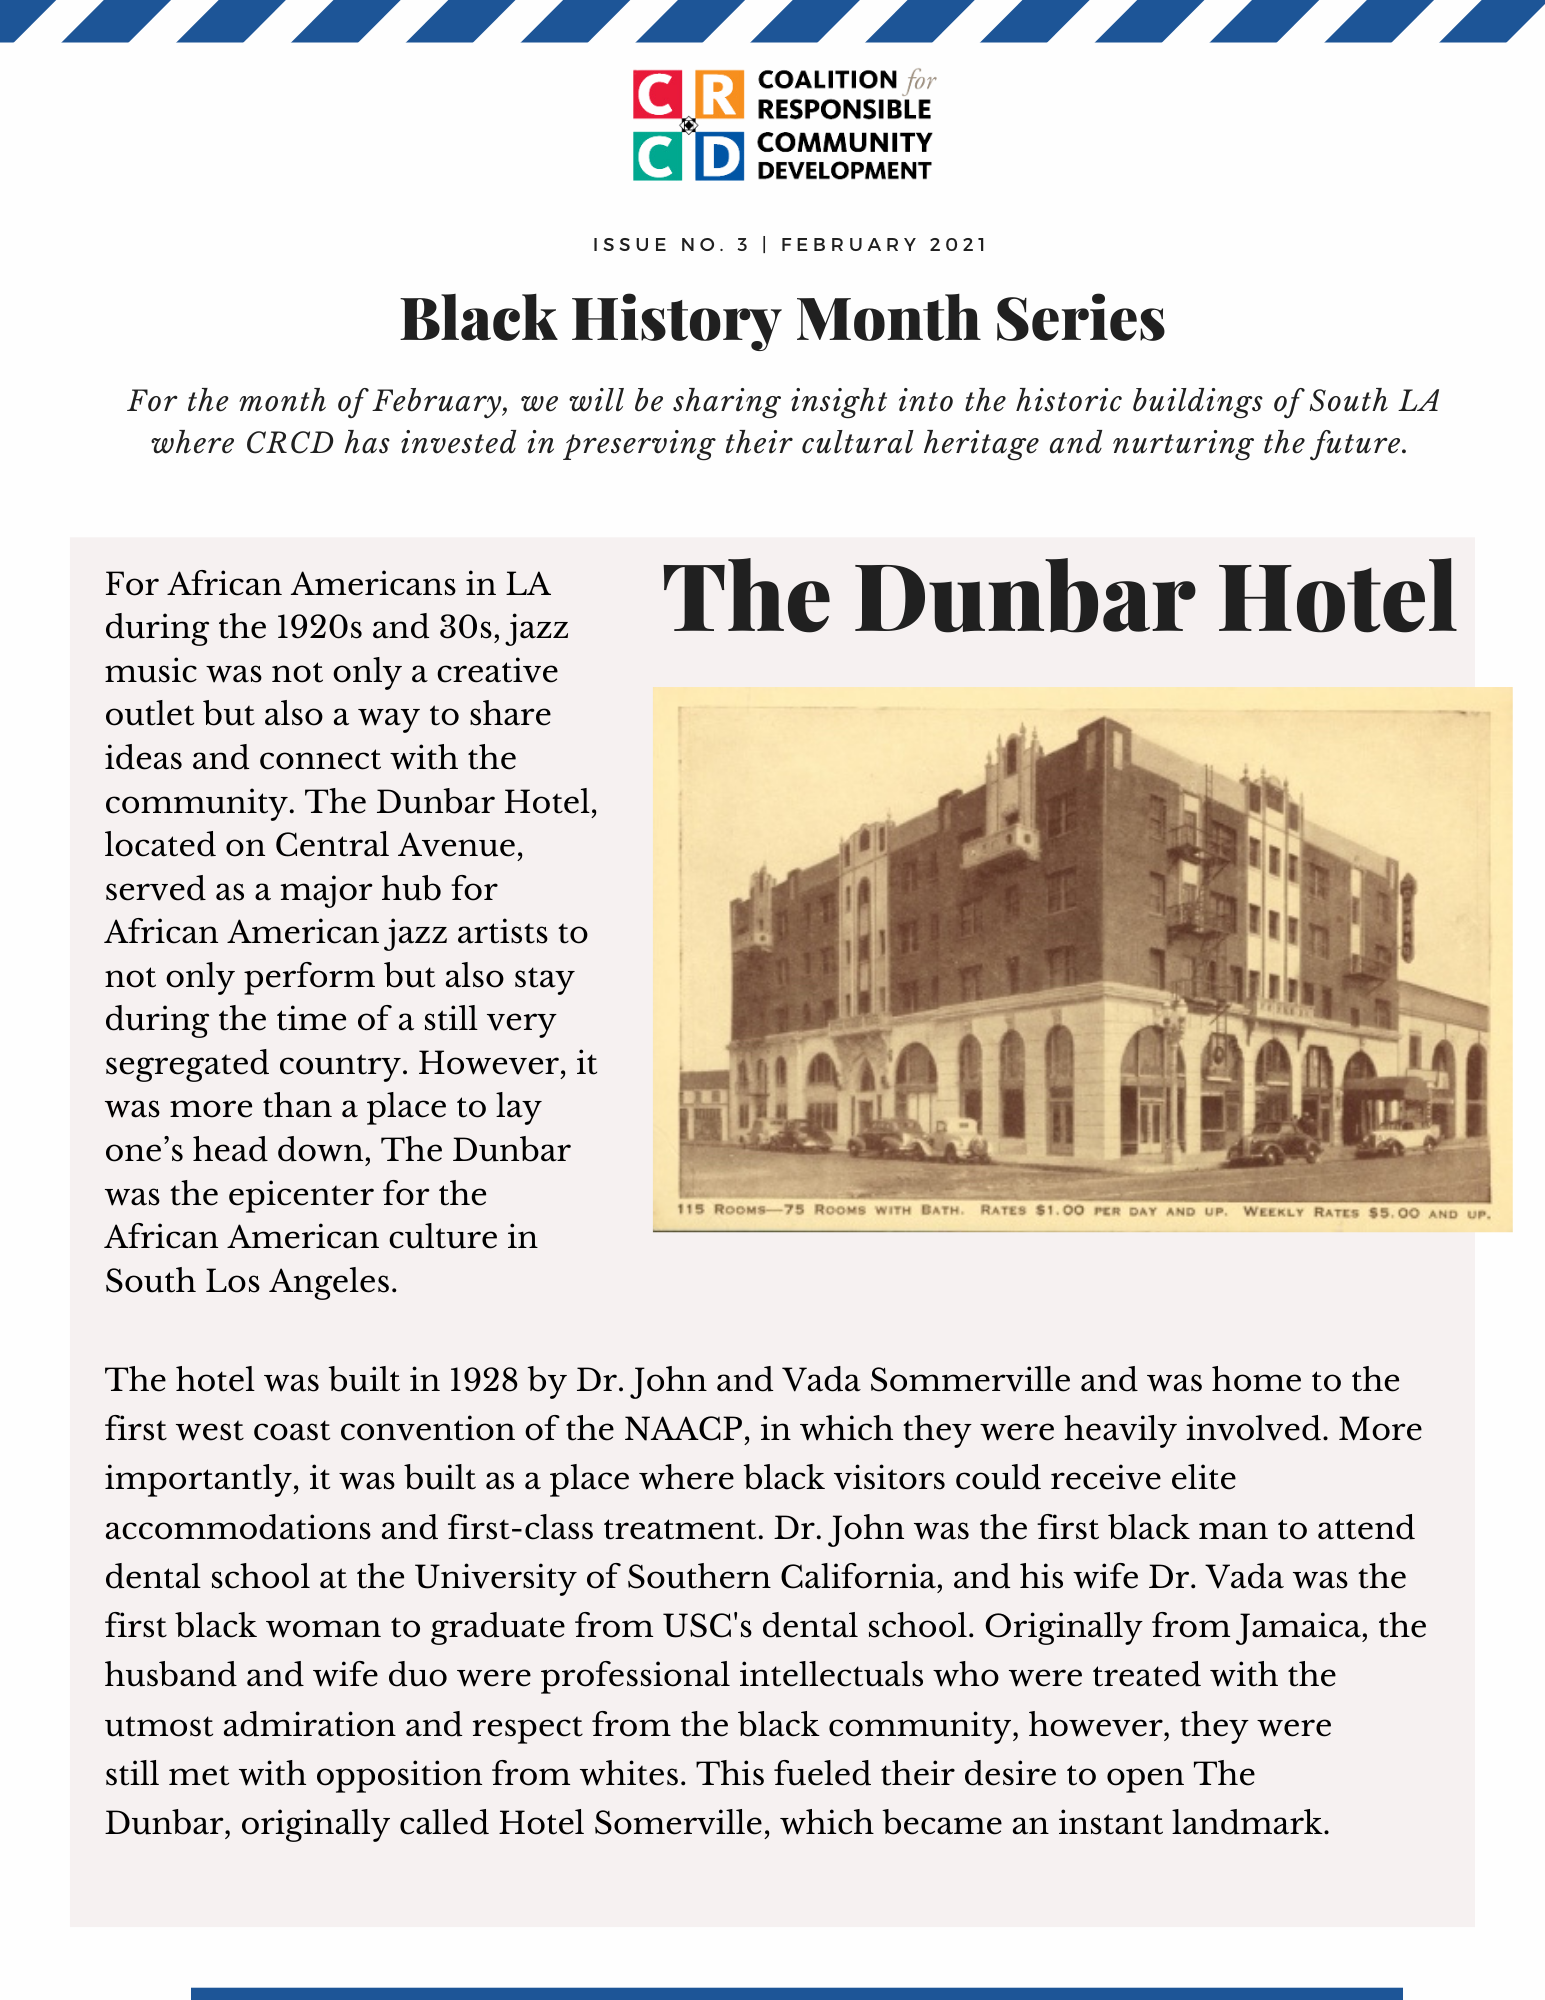 The Dunbar Hotel historic building